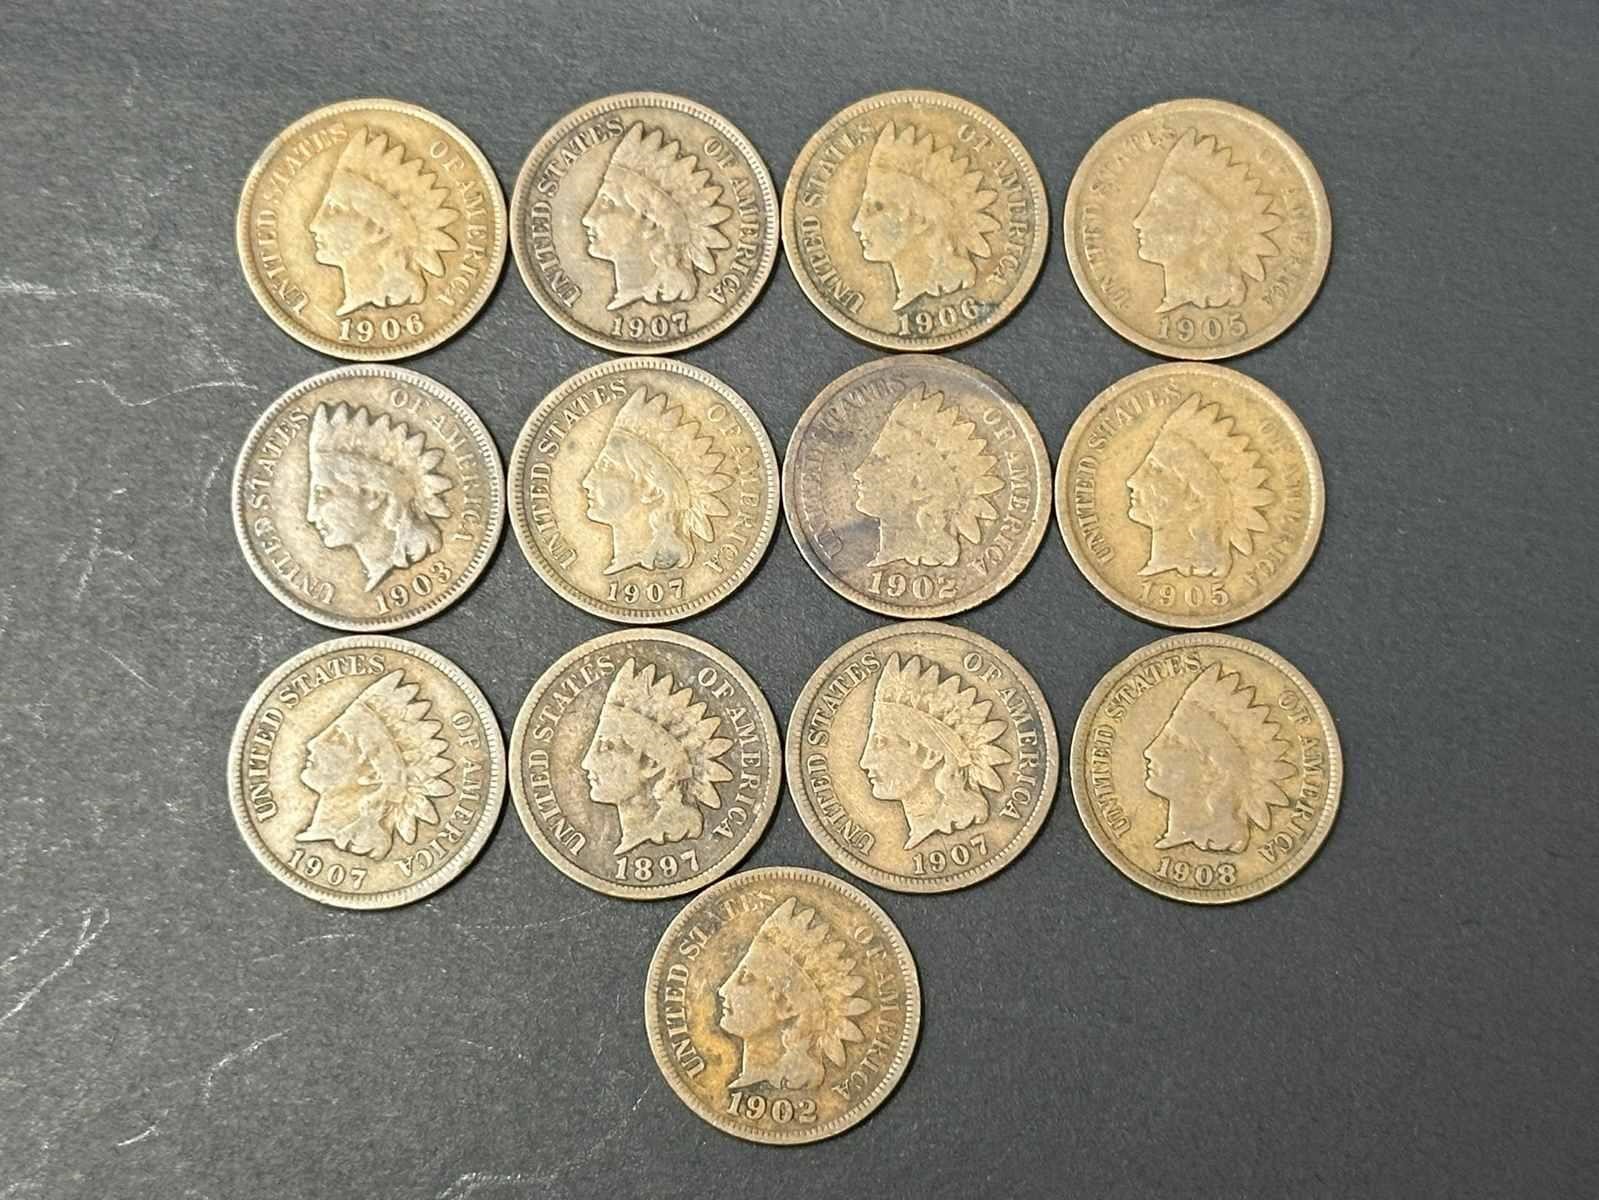 Thirteen Indian Head Pennies